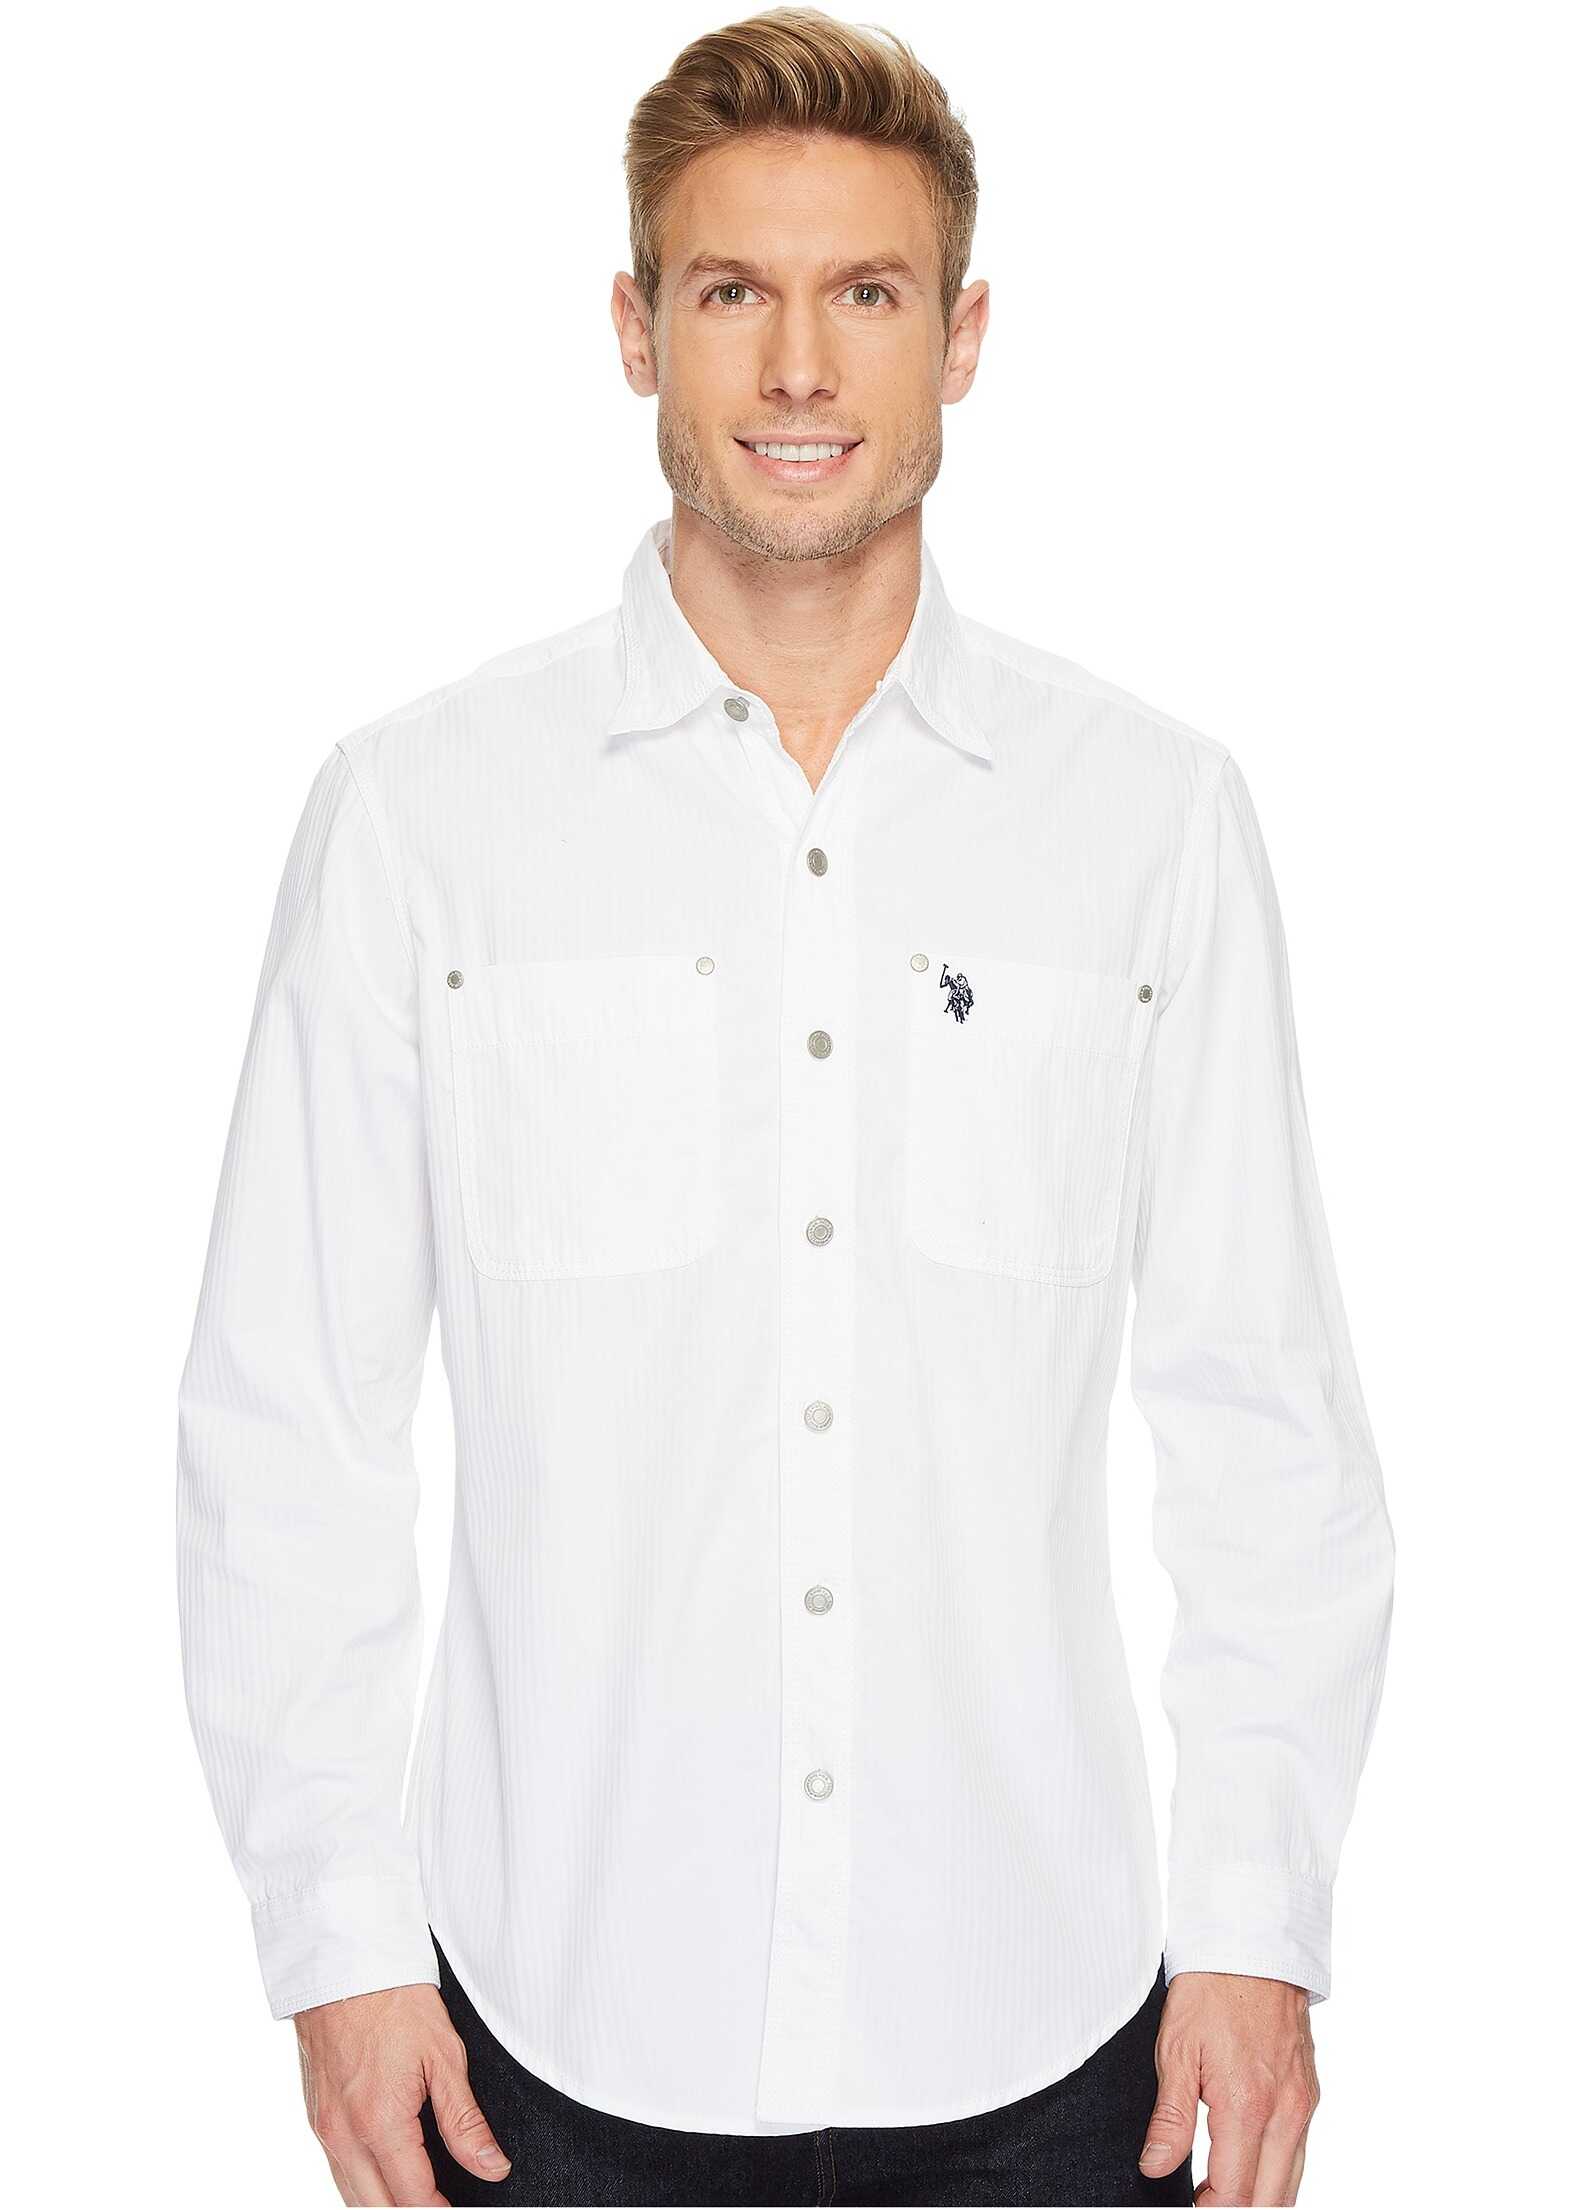 U.S. POLO ASSN. Long Sleeve Dobby Sport Shirt White